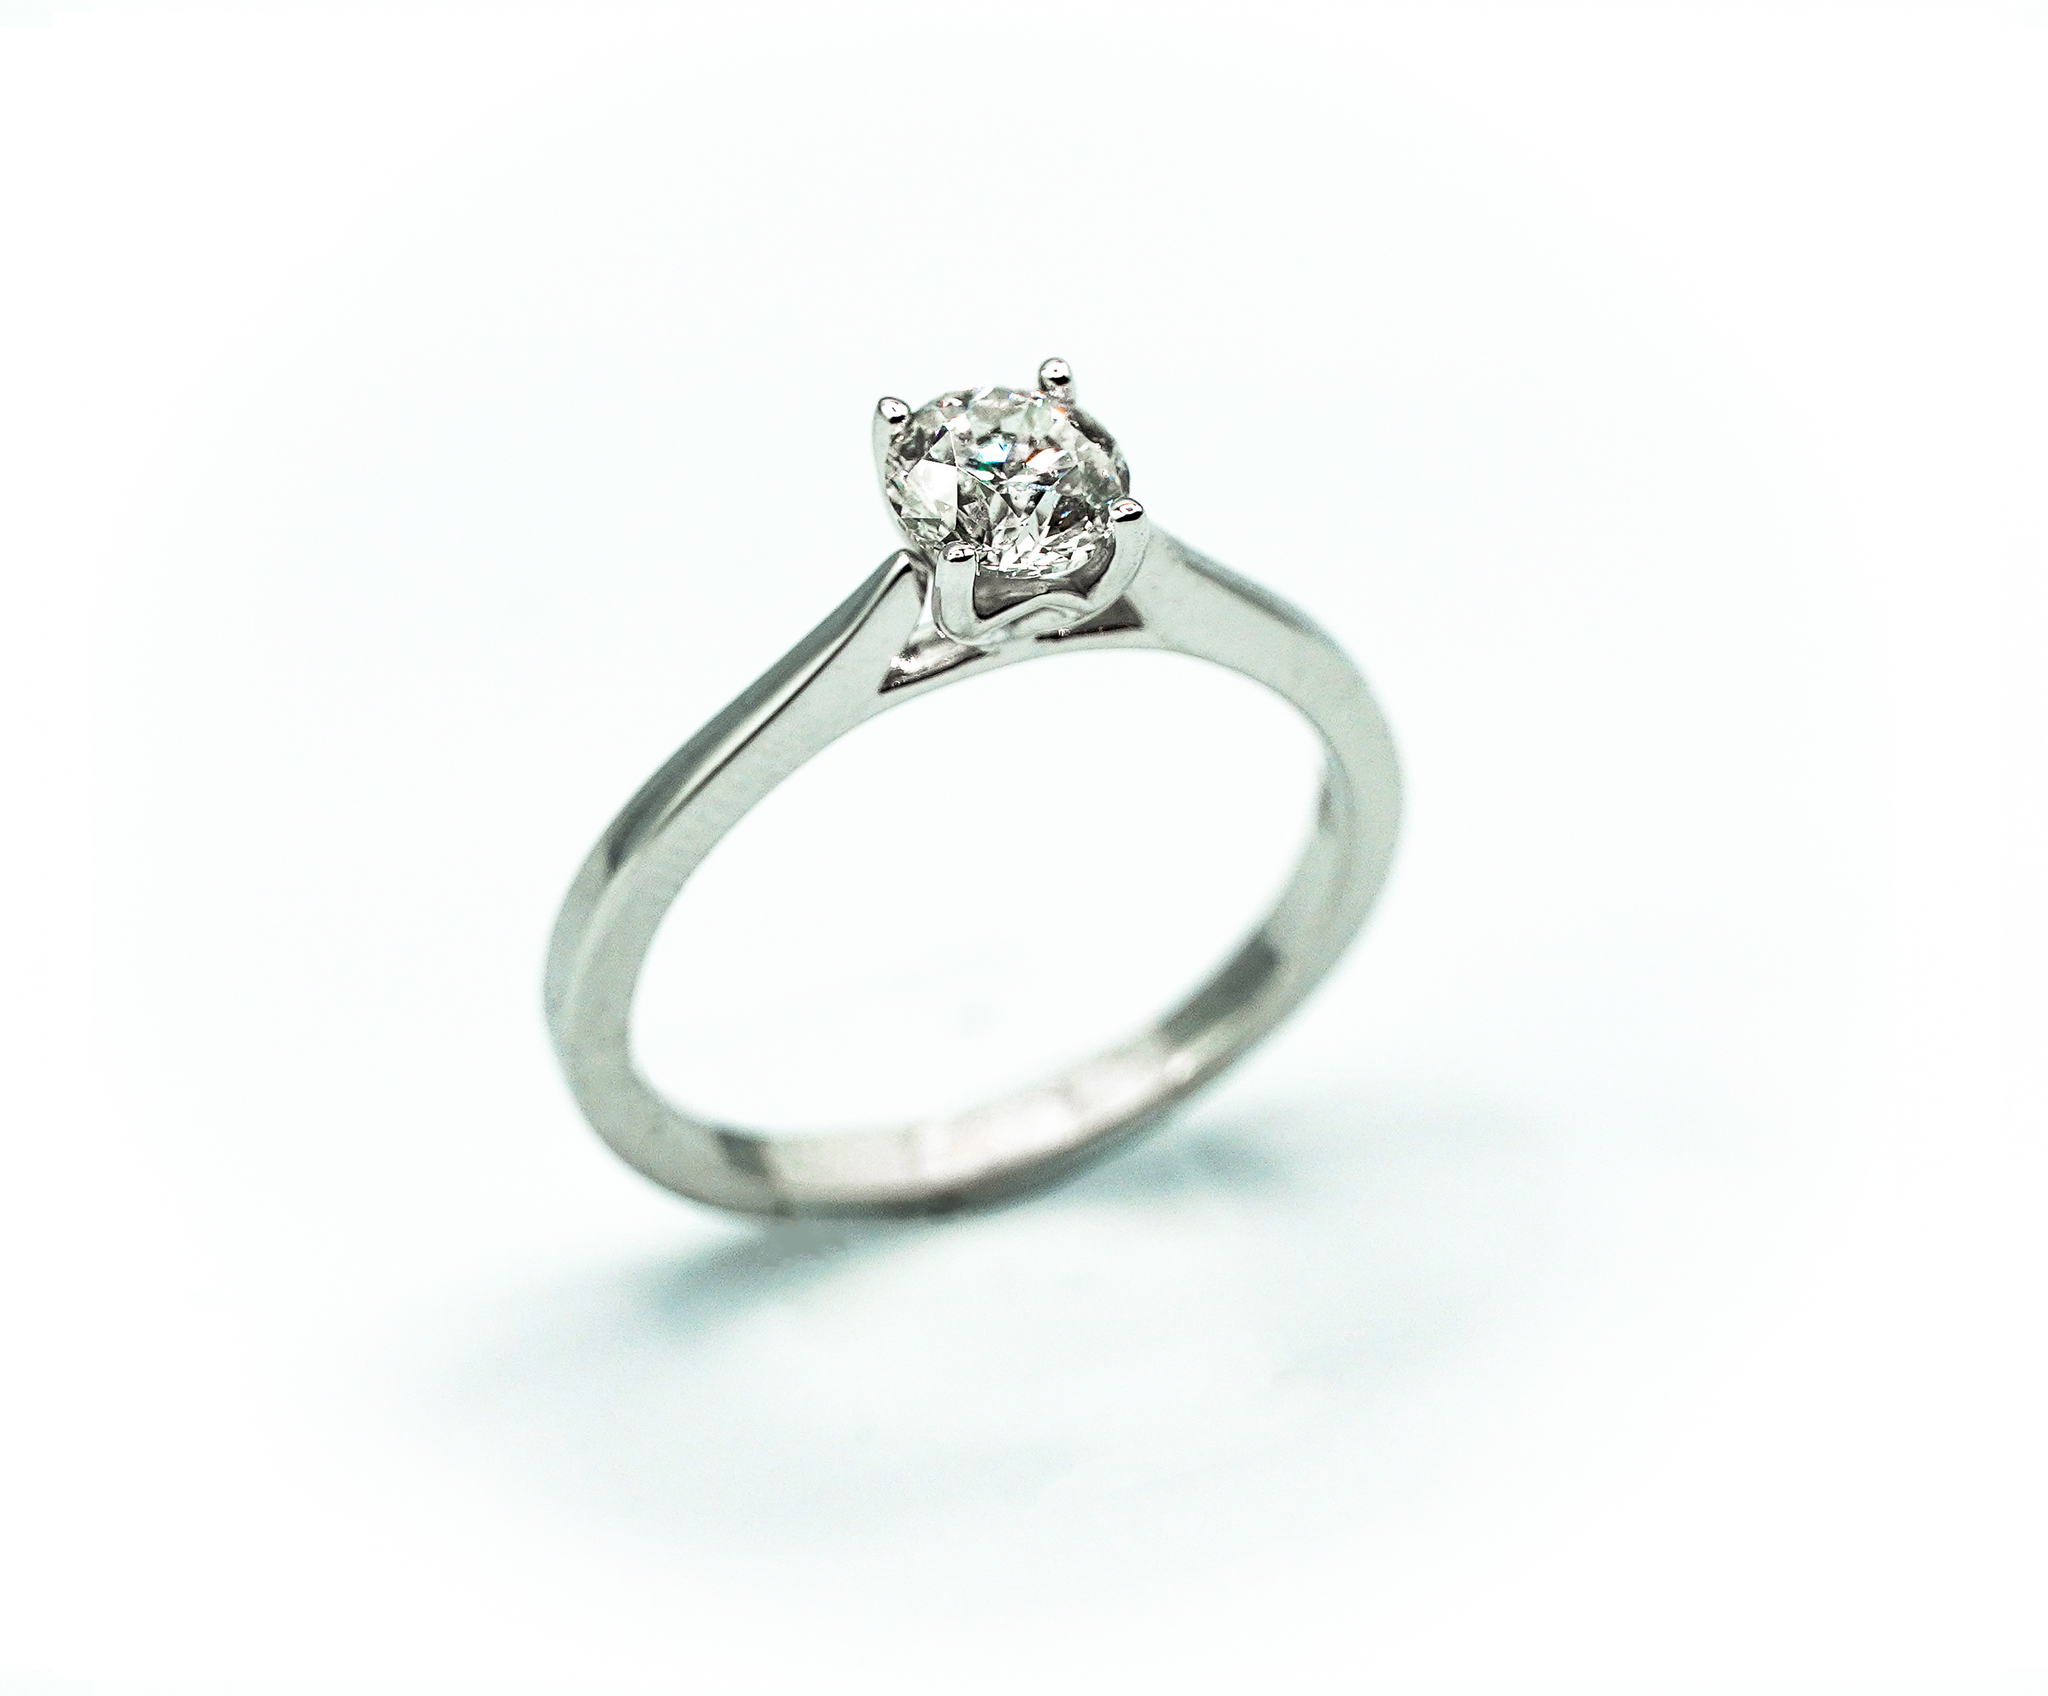 Montalvo Diamonds - Round Modified Brilliant Solitaire Ring in 14kt White Gold